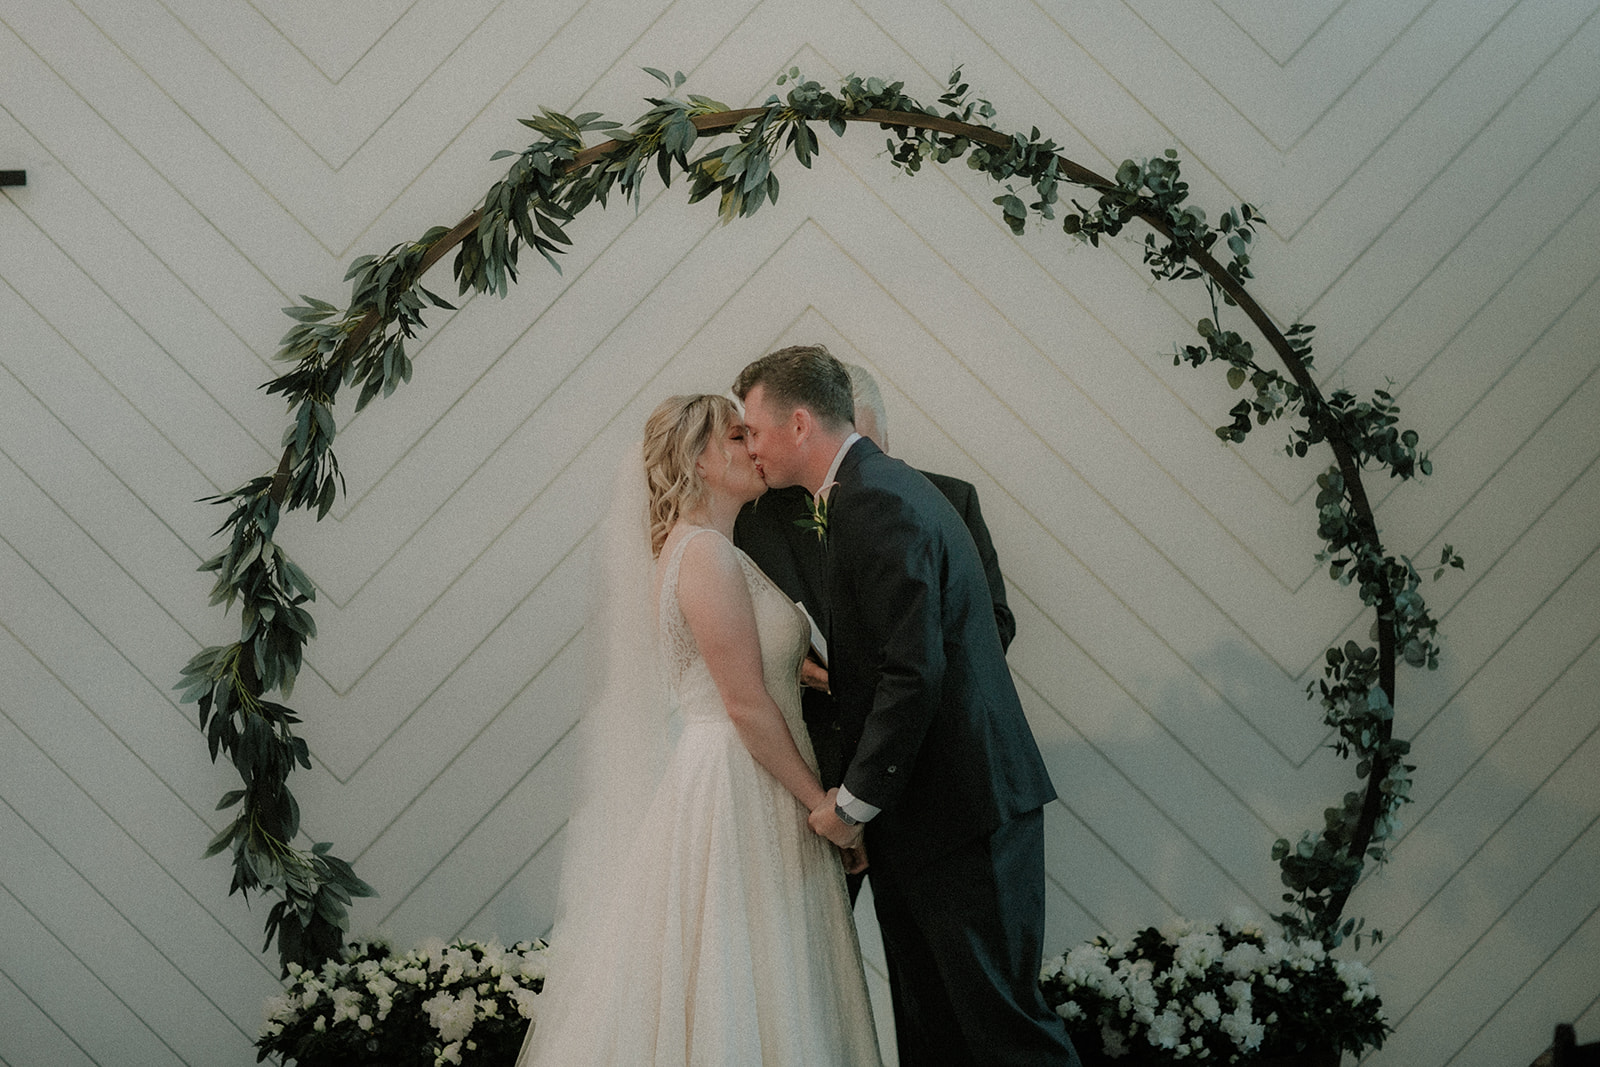 Oregon indoor wedding photographer
Creative documentary wedding photography
Nontraditional wedding photography
Unique we